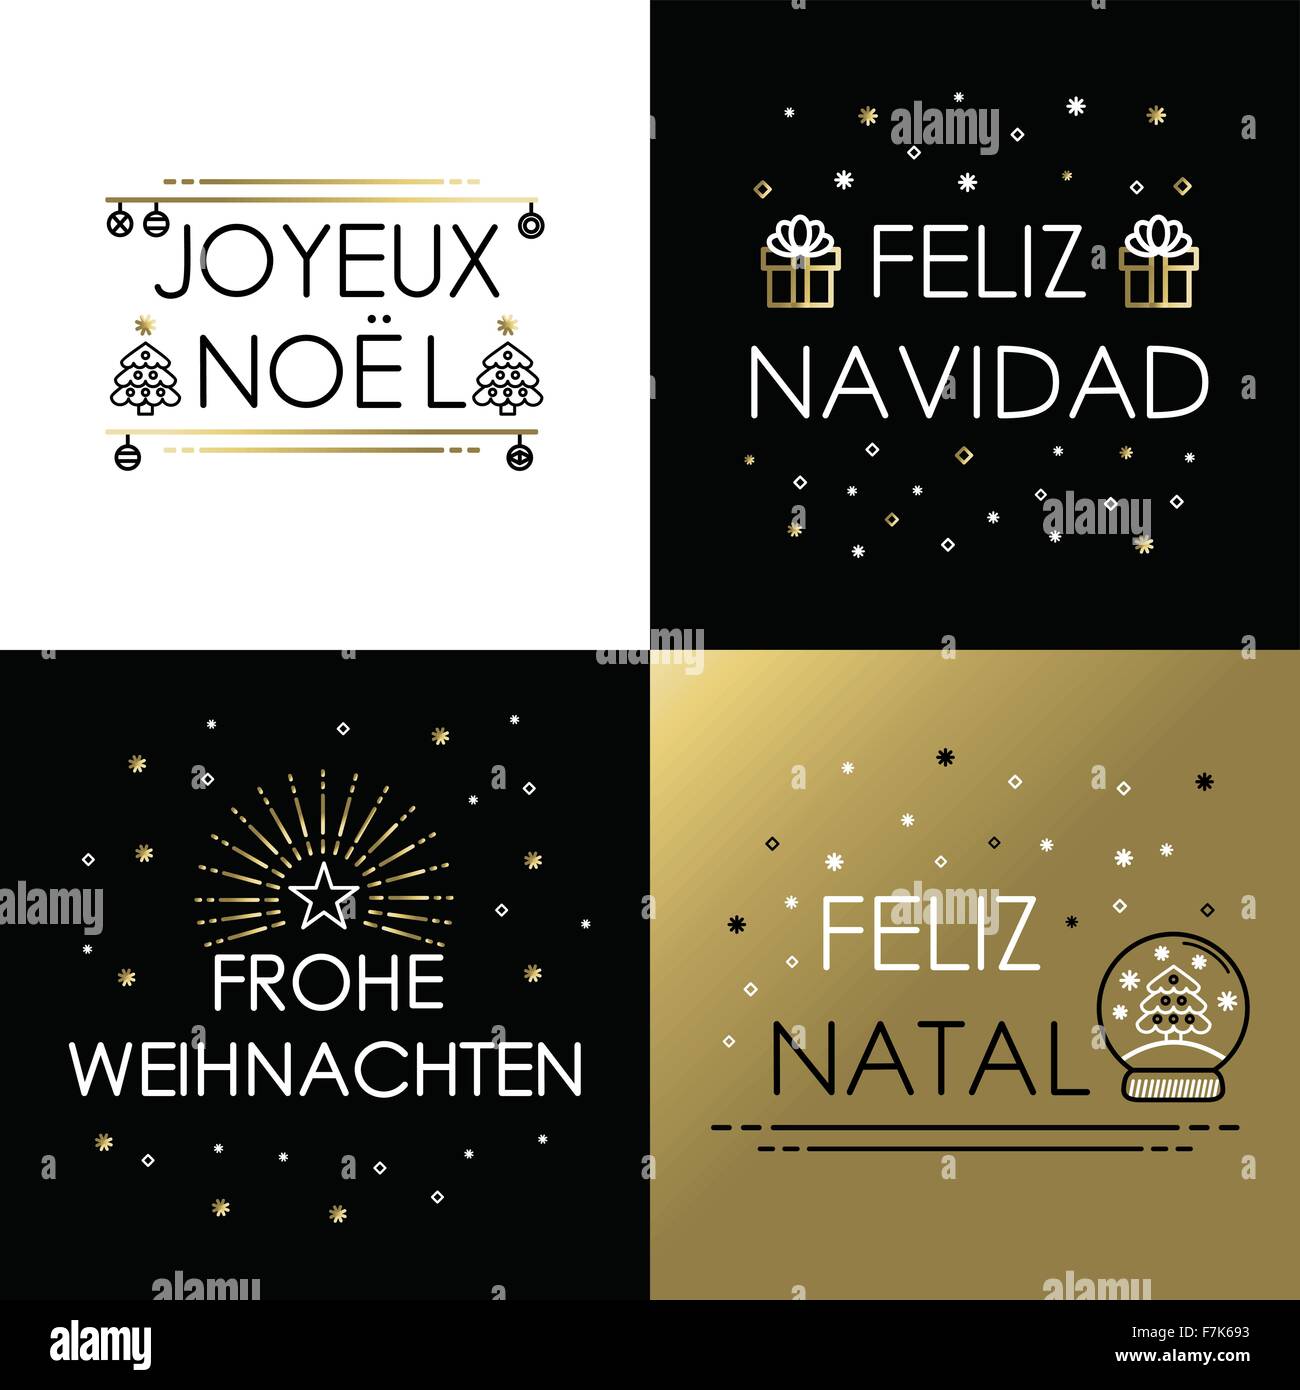 Merry Christmas greeting card impostato nel profilo gold style: joyeux noel, Feliz Navidad, frohe weihnachten e feliz natal testo. Illustrazione Vettoriale